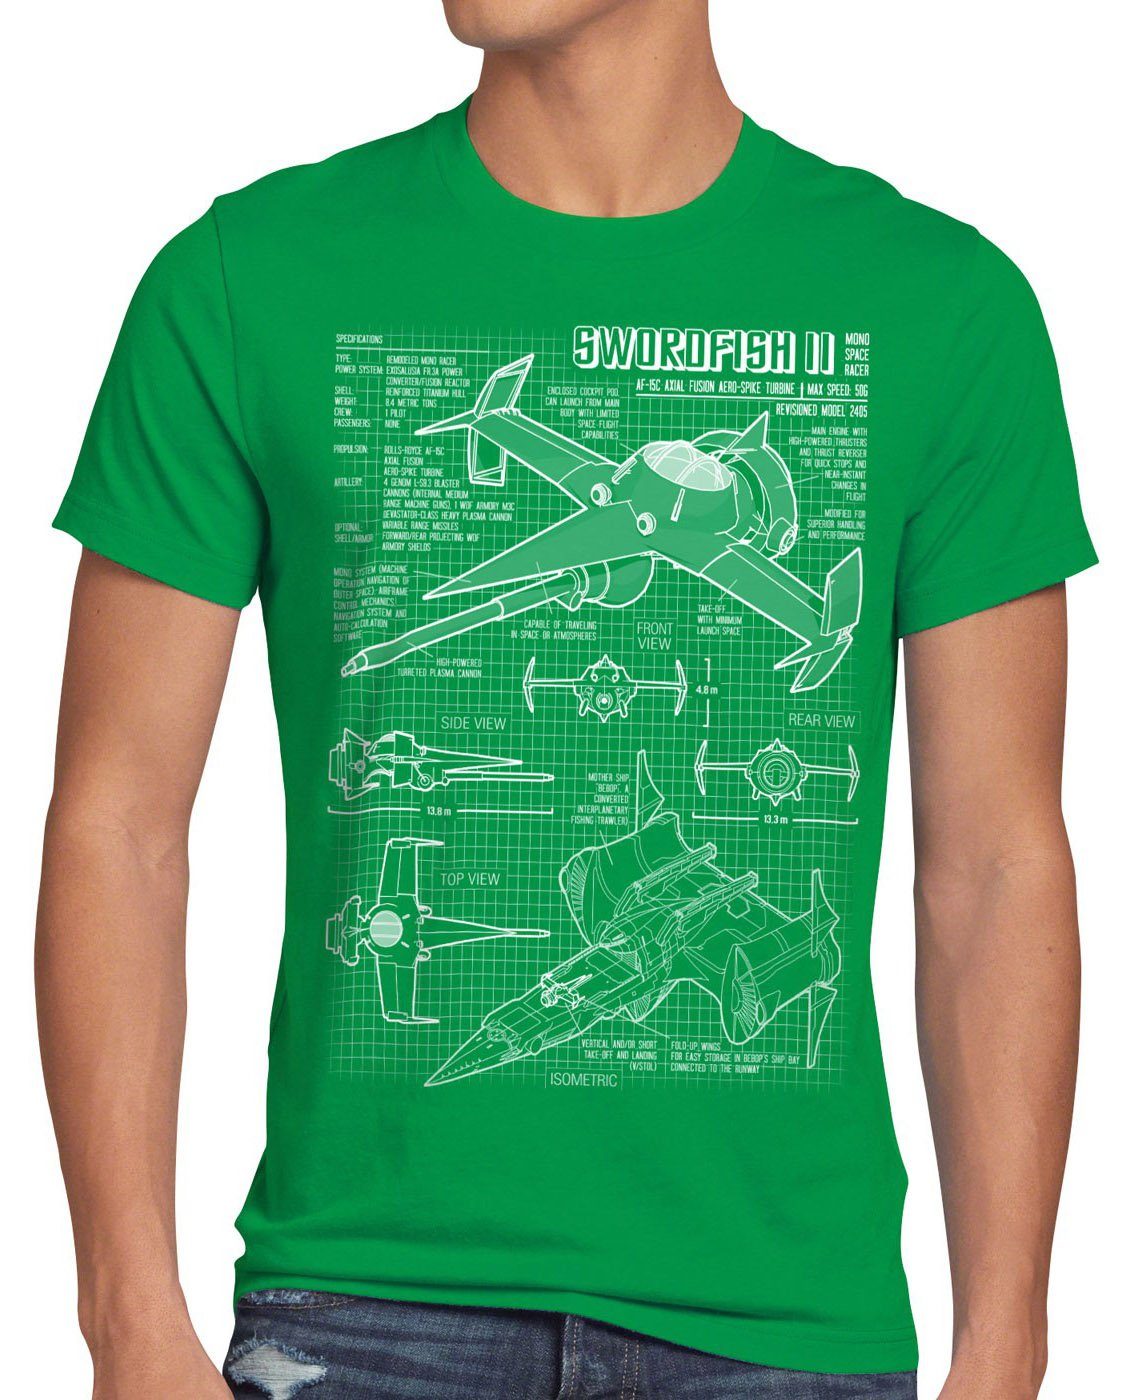 II style3 grün Print-Shirt mono T-Shirt cowboy Bebop Swordfish Herren anime racer